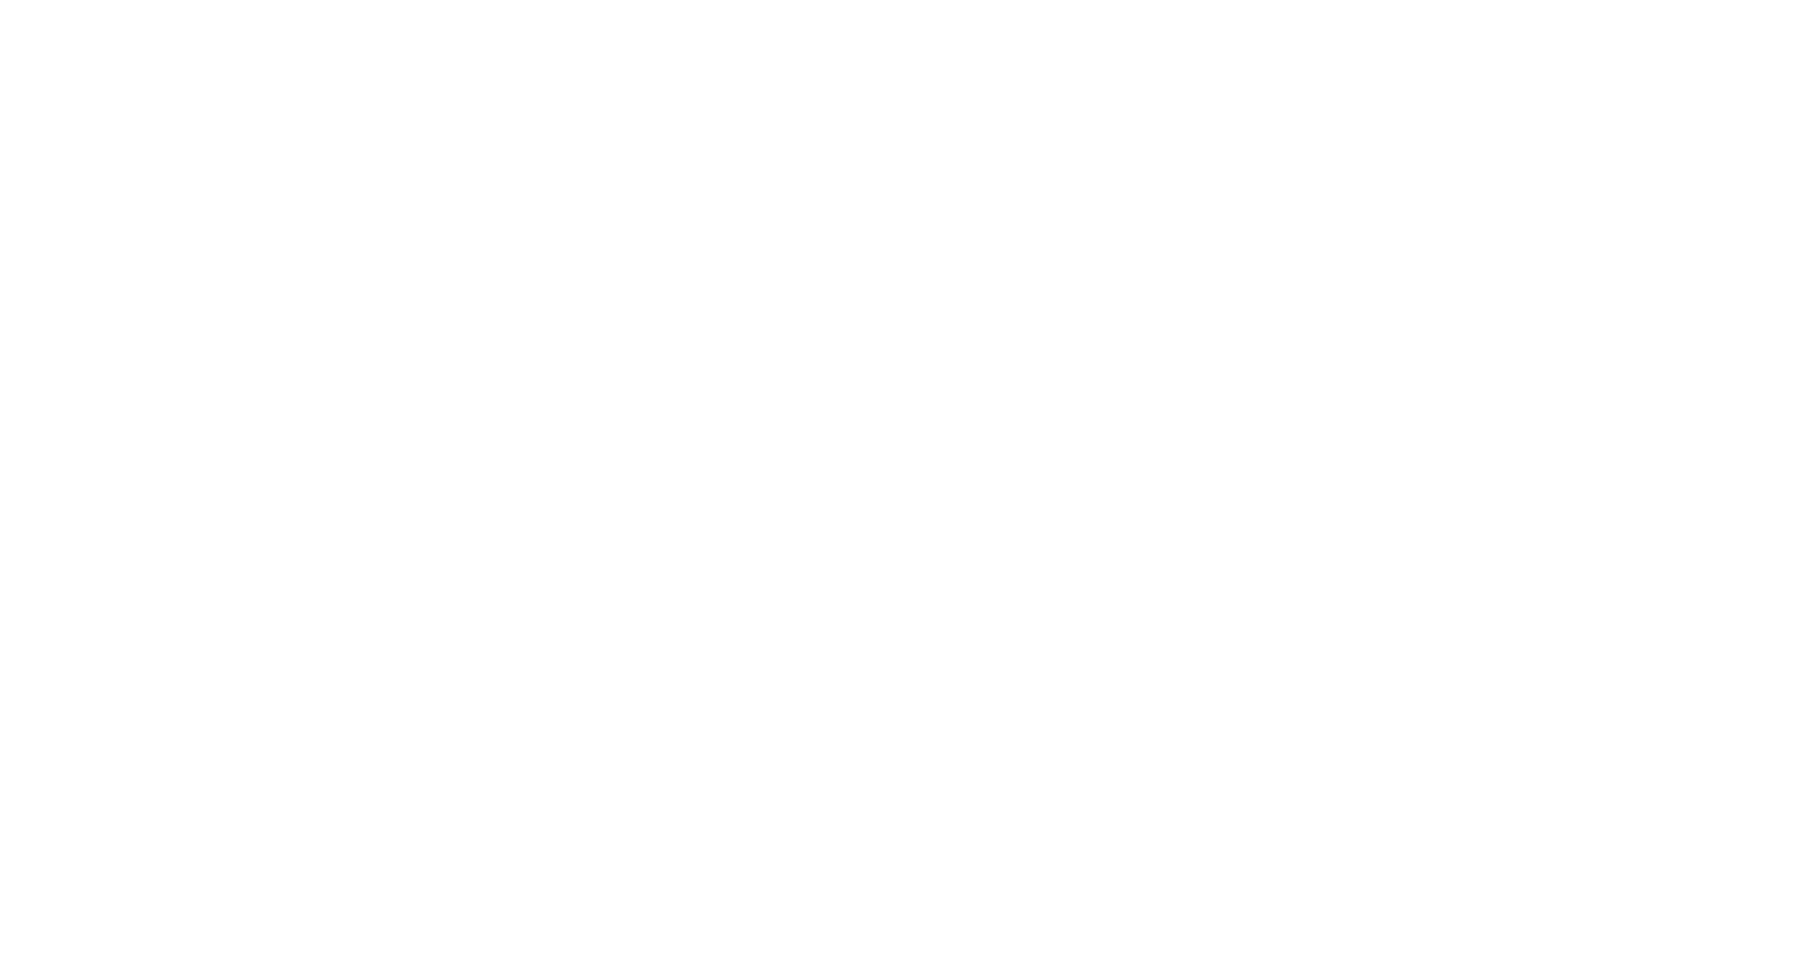 STUDIO TOMBOY